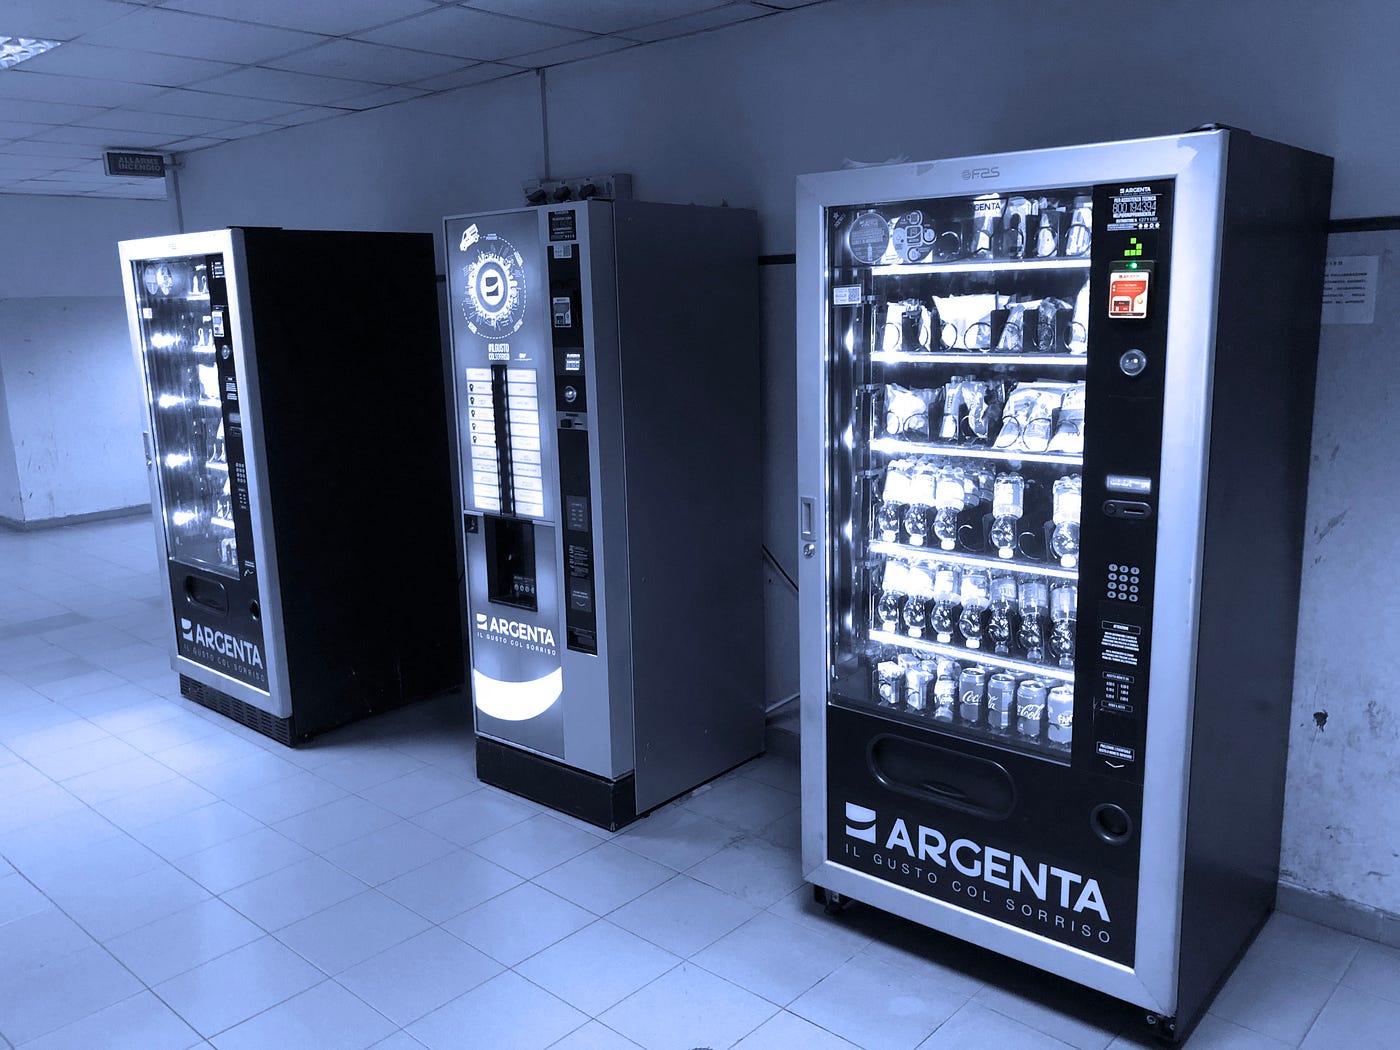 How I hacked modern Vending Machines | by Matteo Pisani | HackerNoon.com |  Medium